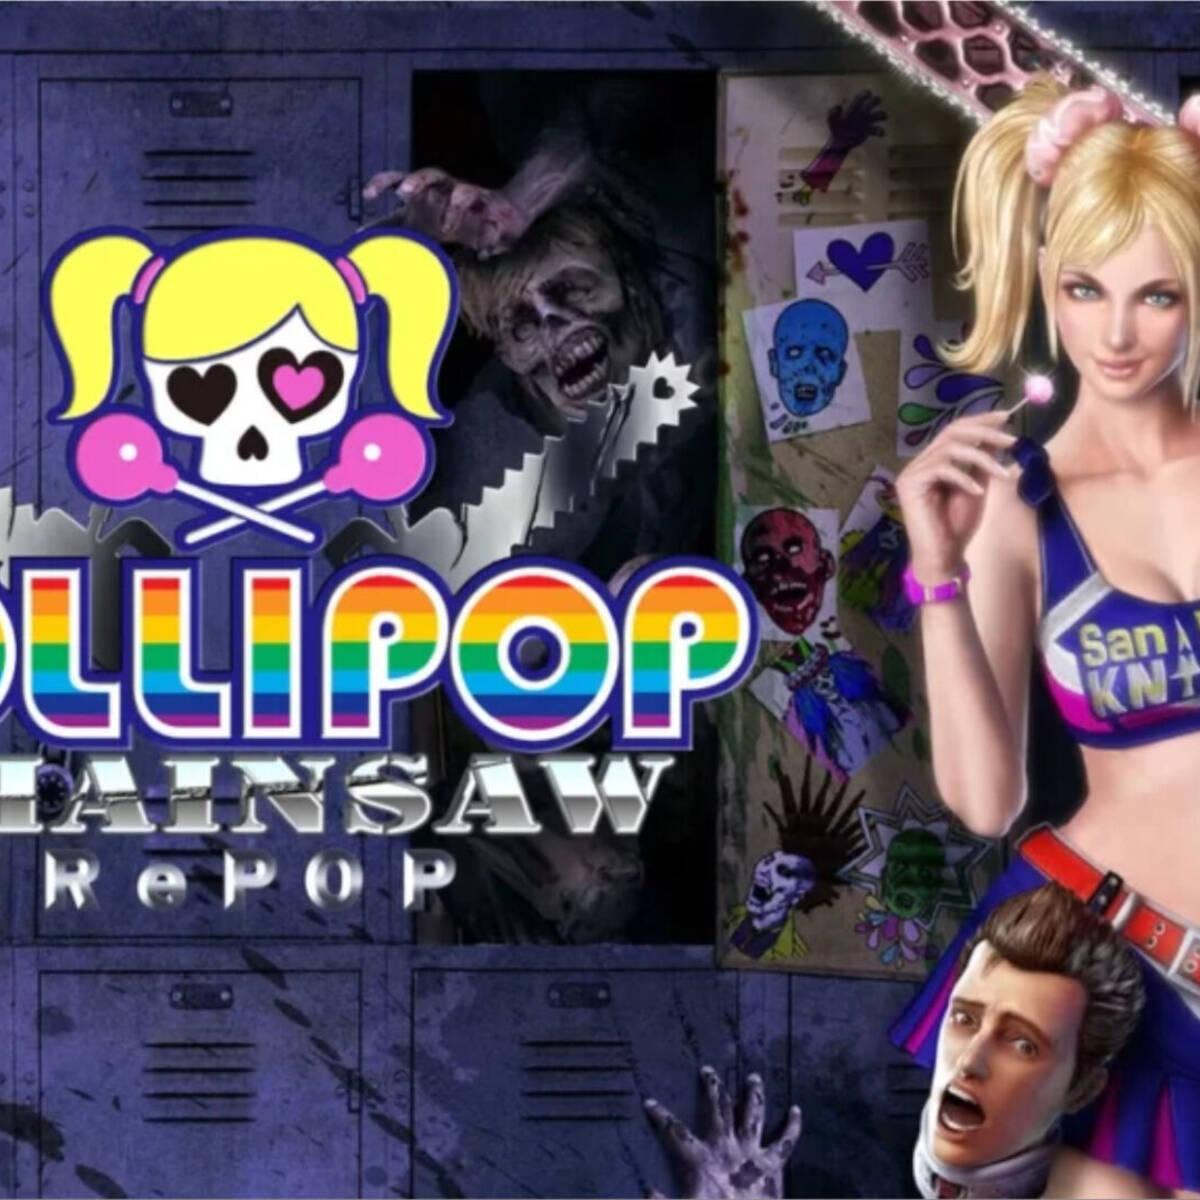 El remake Lollipop Chainsaw RePOP se retrasa a verano de 2024 - Vandal